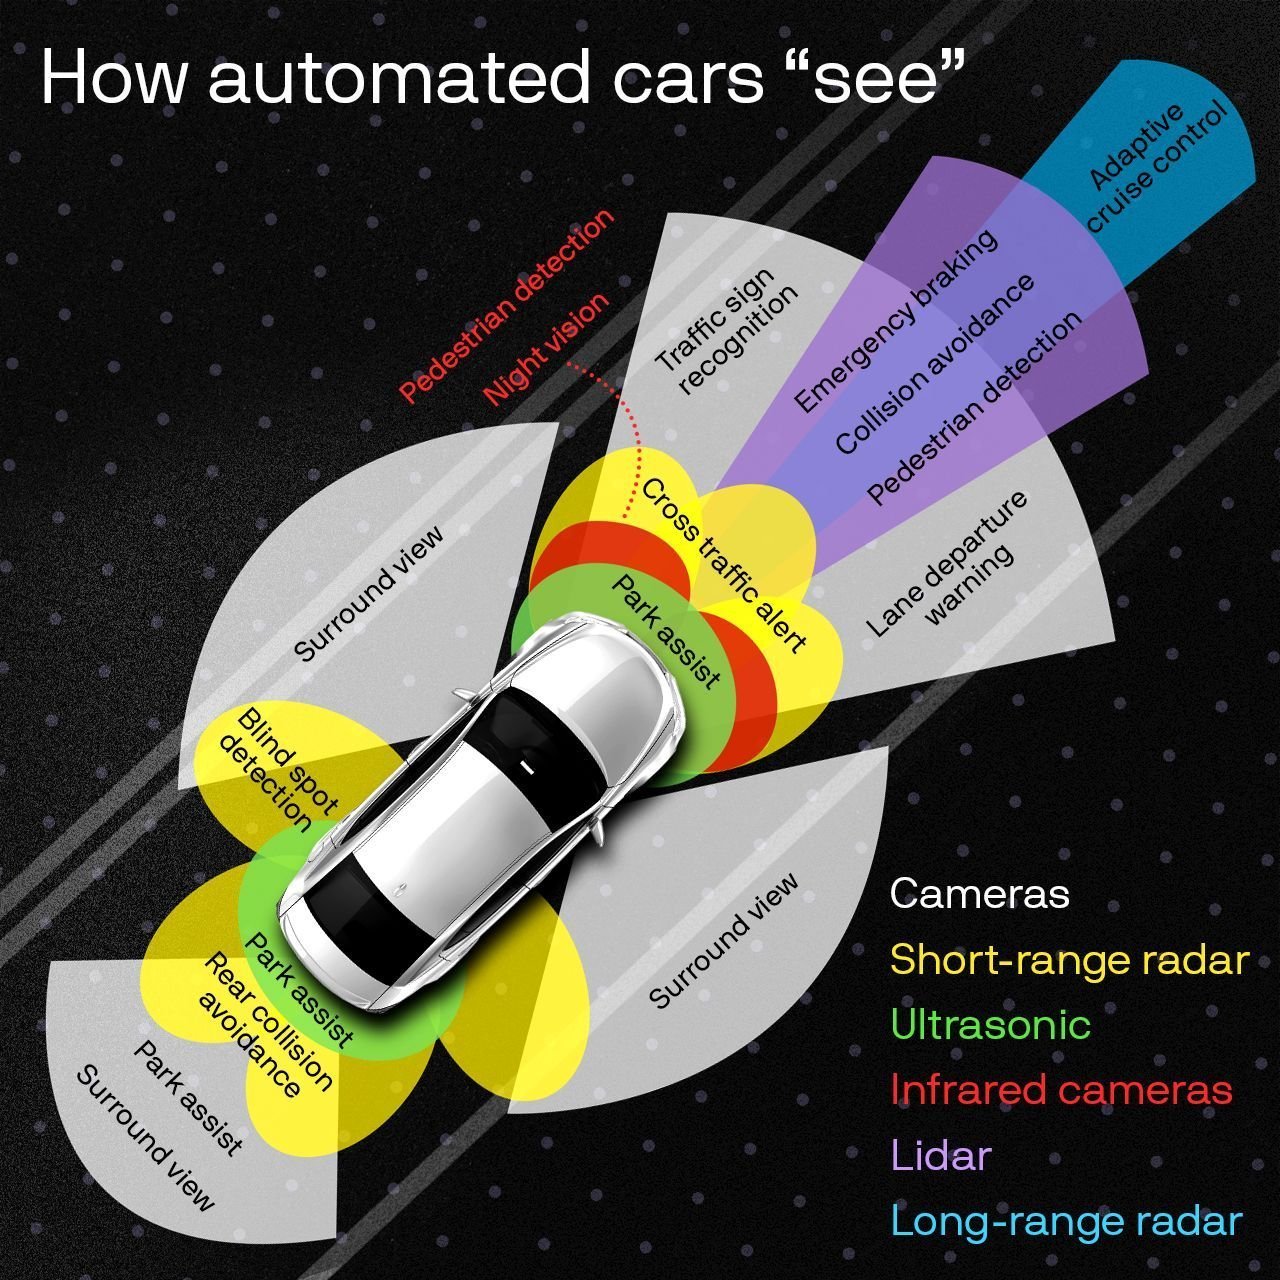 How autonomous vehicles "see" the world around them